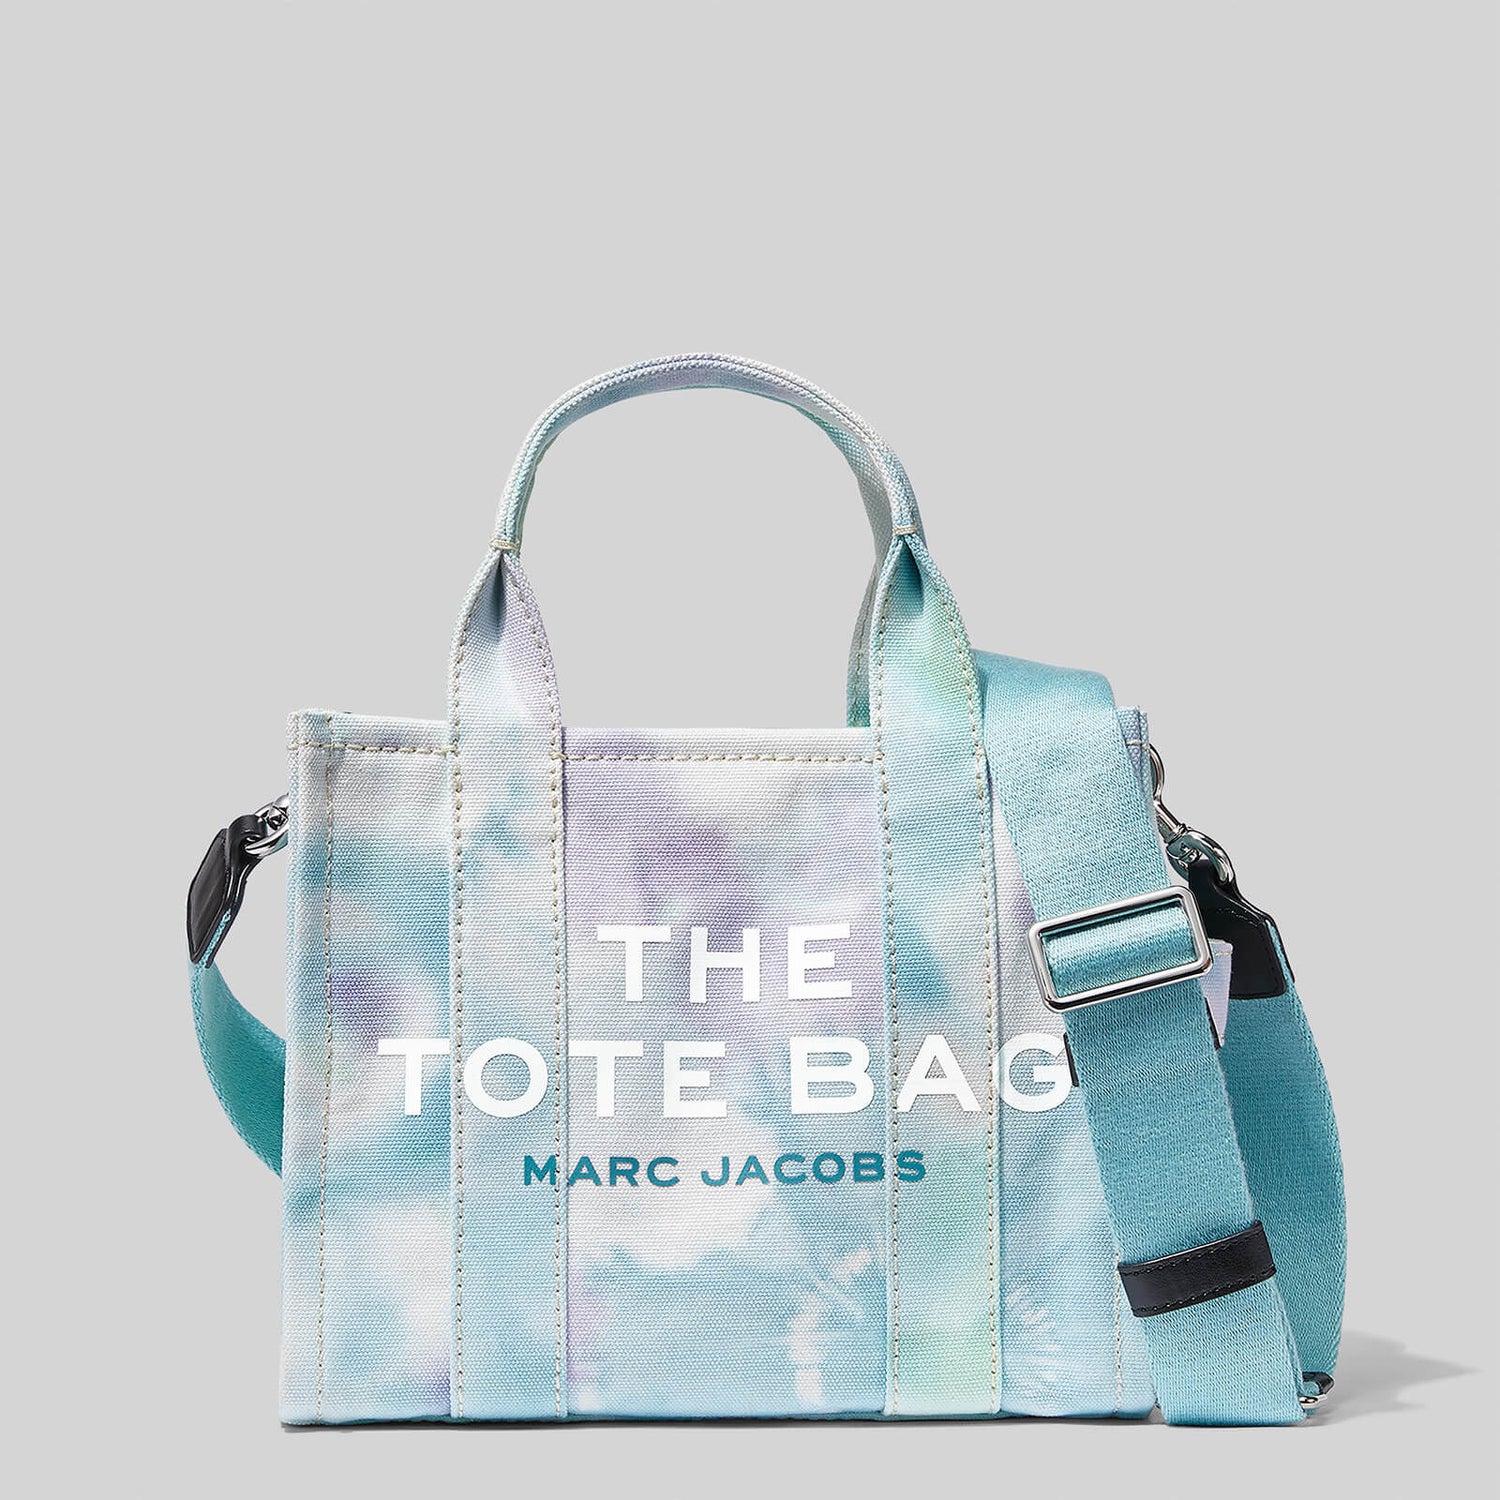 Marc Jacobs Women's The Tie Dye Mini Tote Bag - Blue Multi